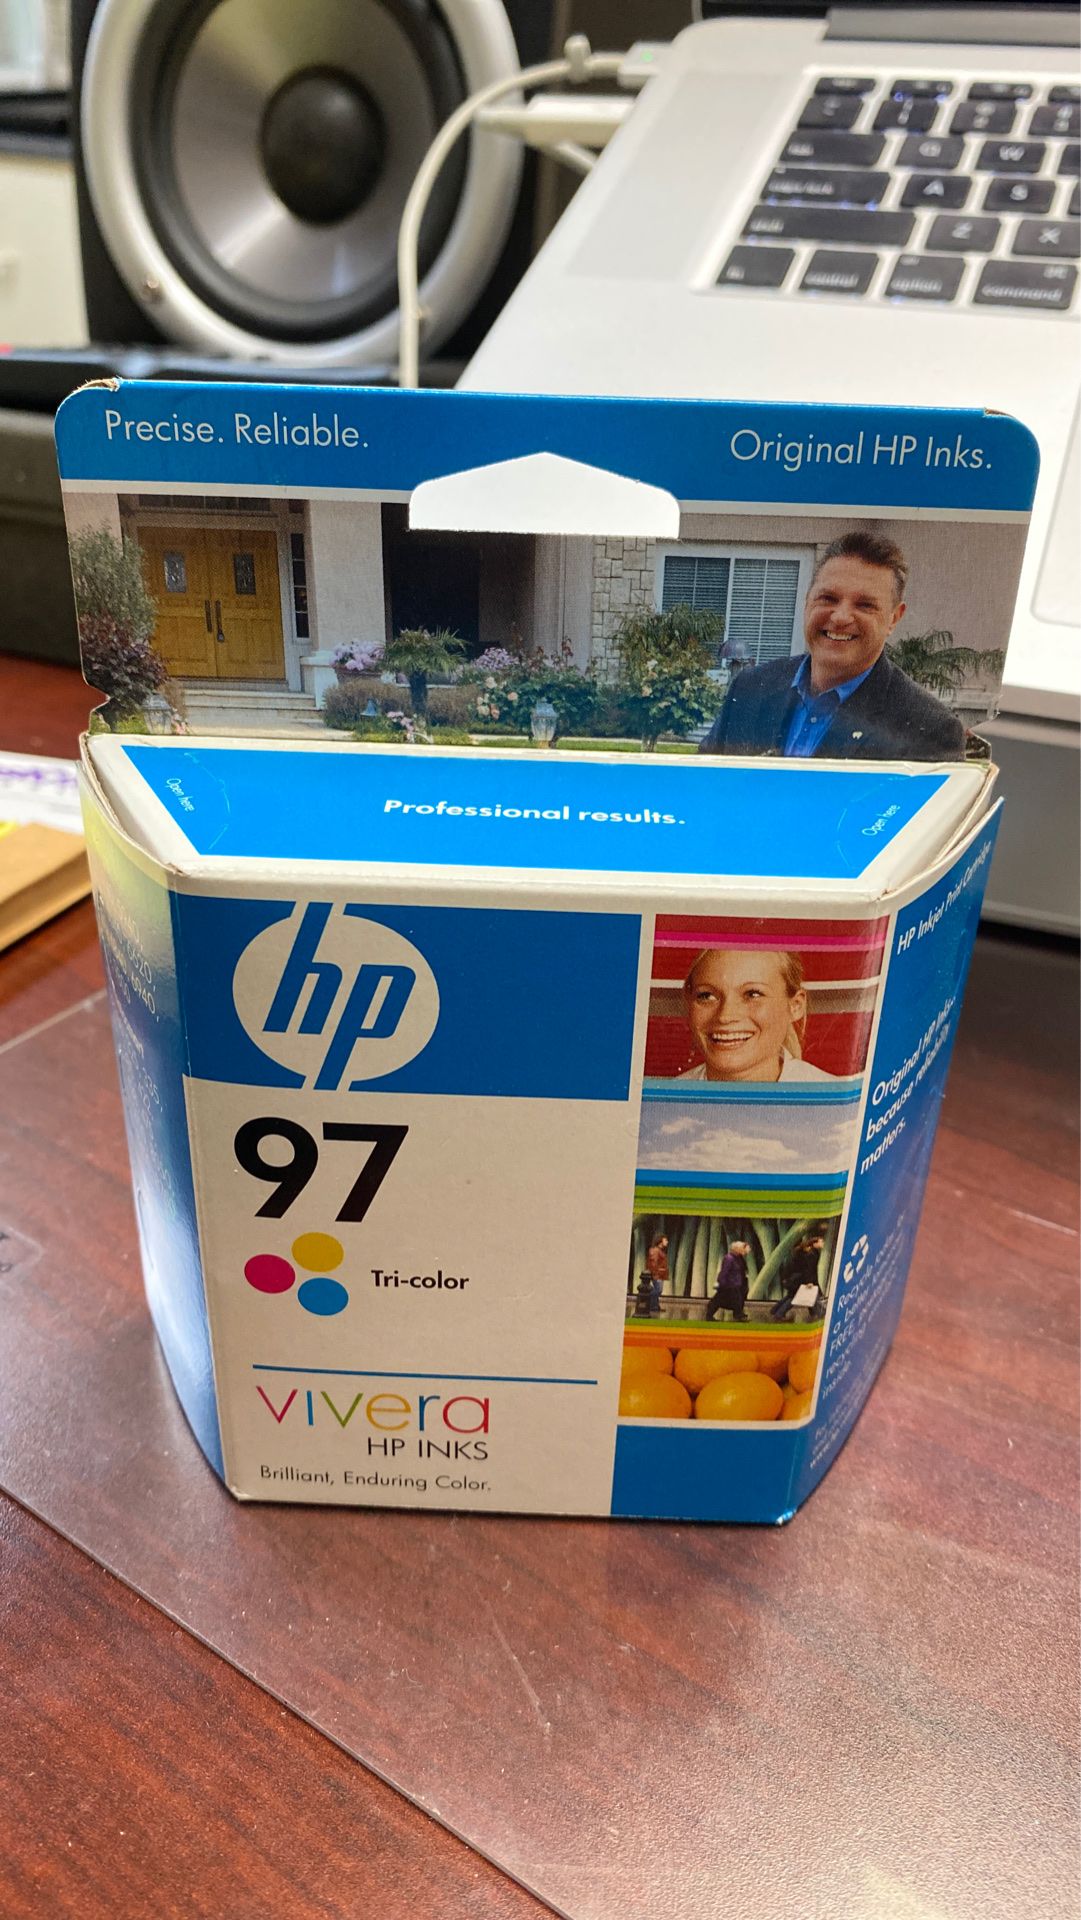 HP 97 tri color ink cartridge for HP printers.